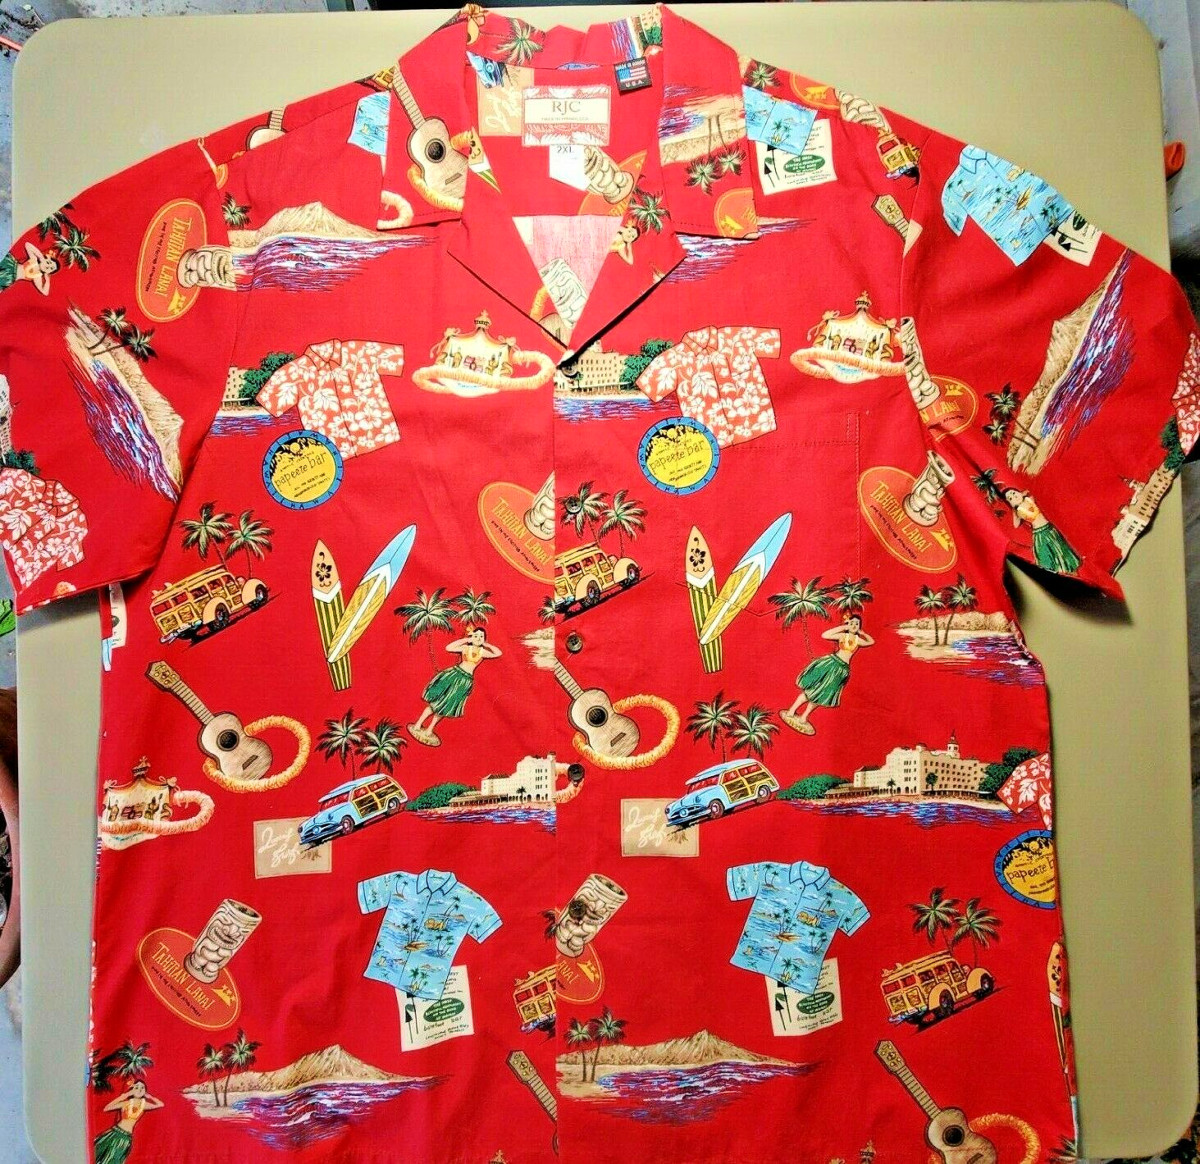 Hawaiian Shirt RJC Hawaii Made Red 100% Cotton Tiki style 2XL Mint condition. Classic Cars, Surfboards, Barefoot Bar, Aloha, Hawaiian.